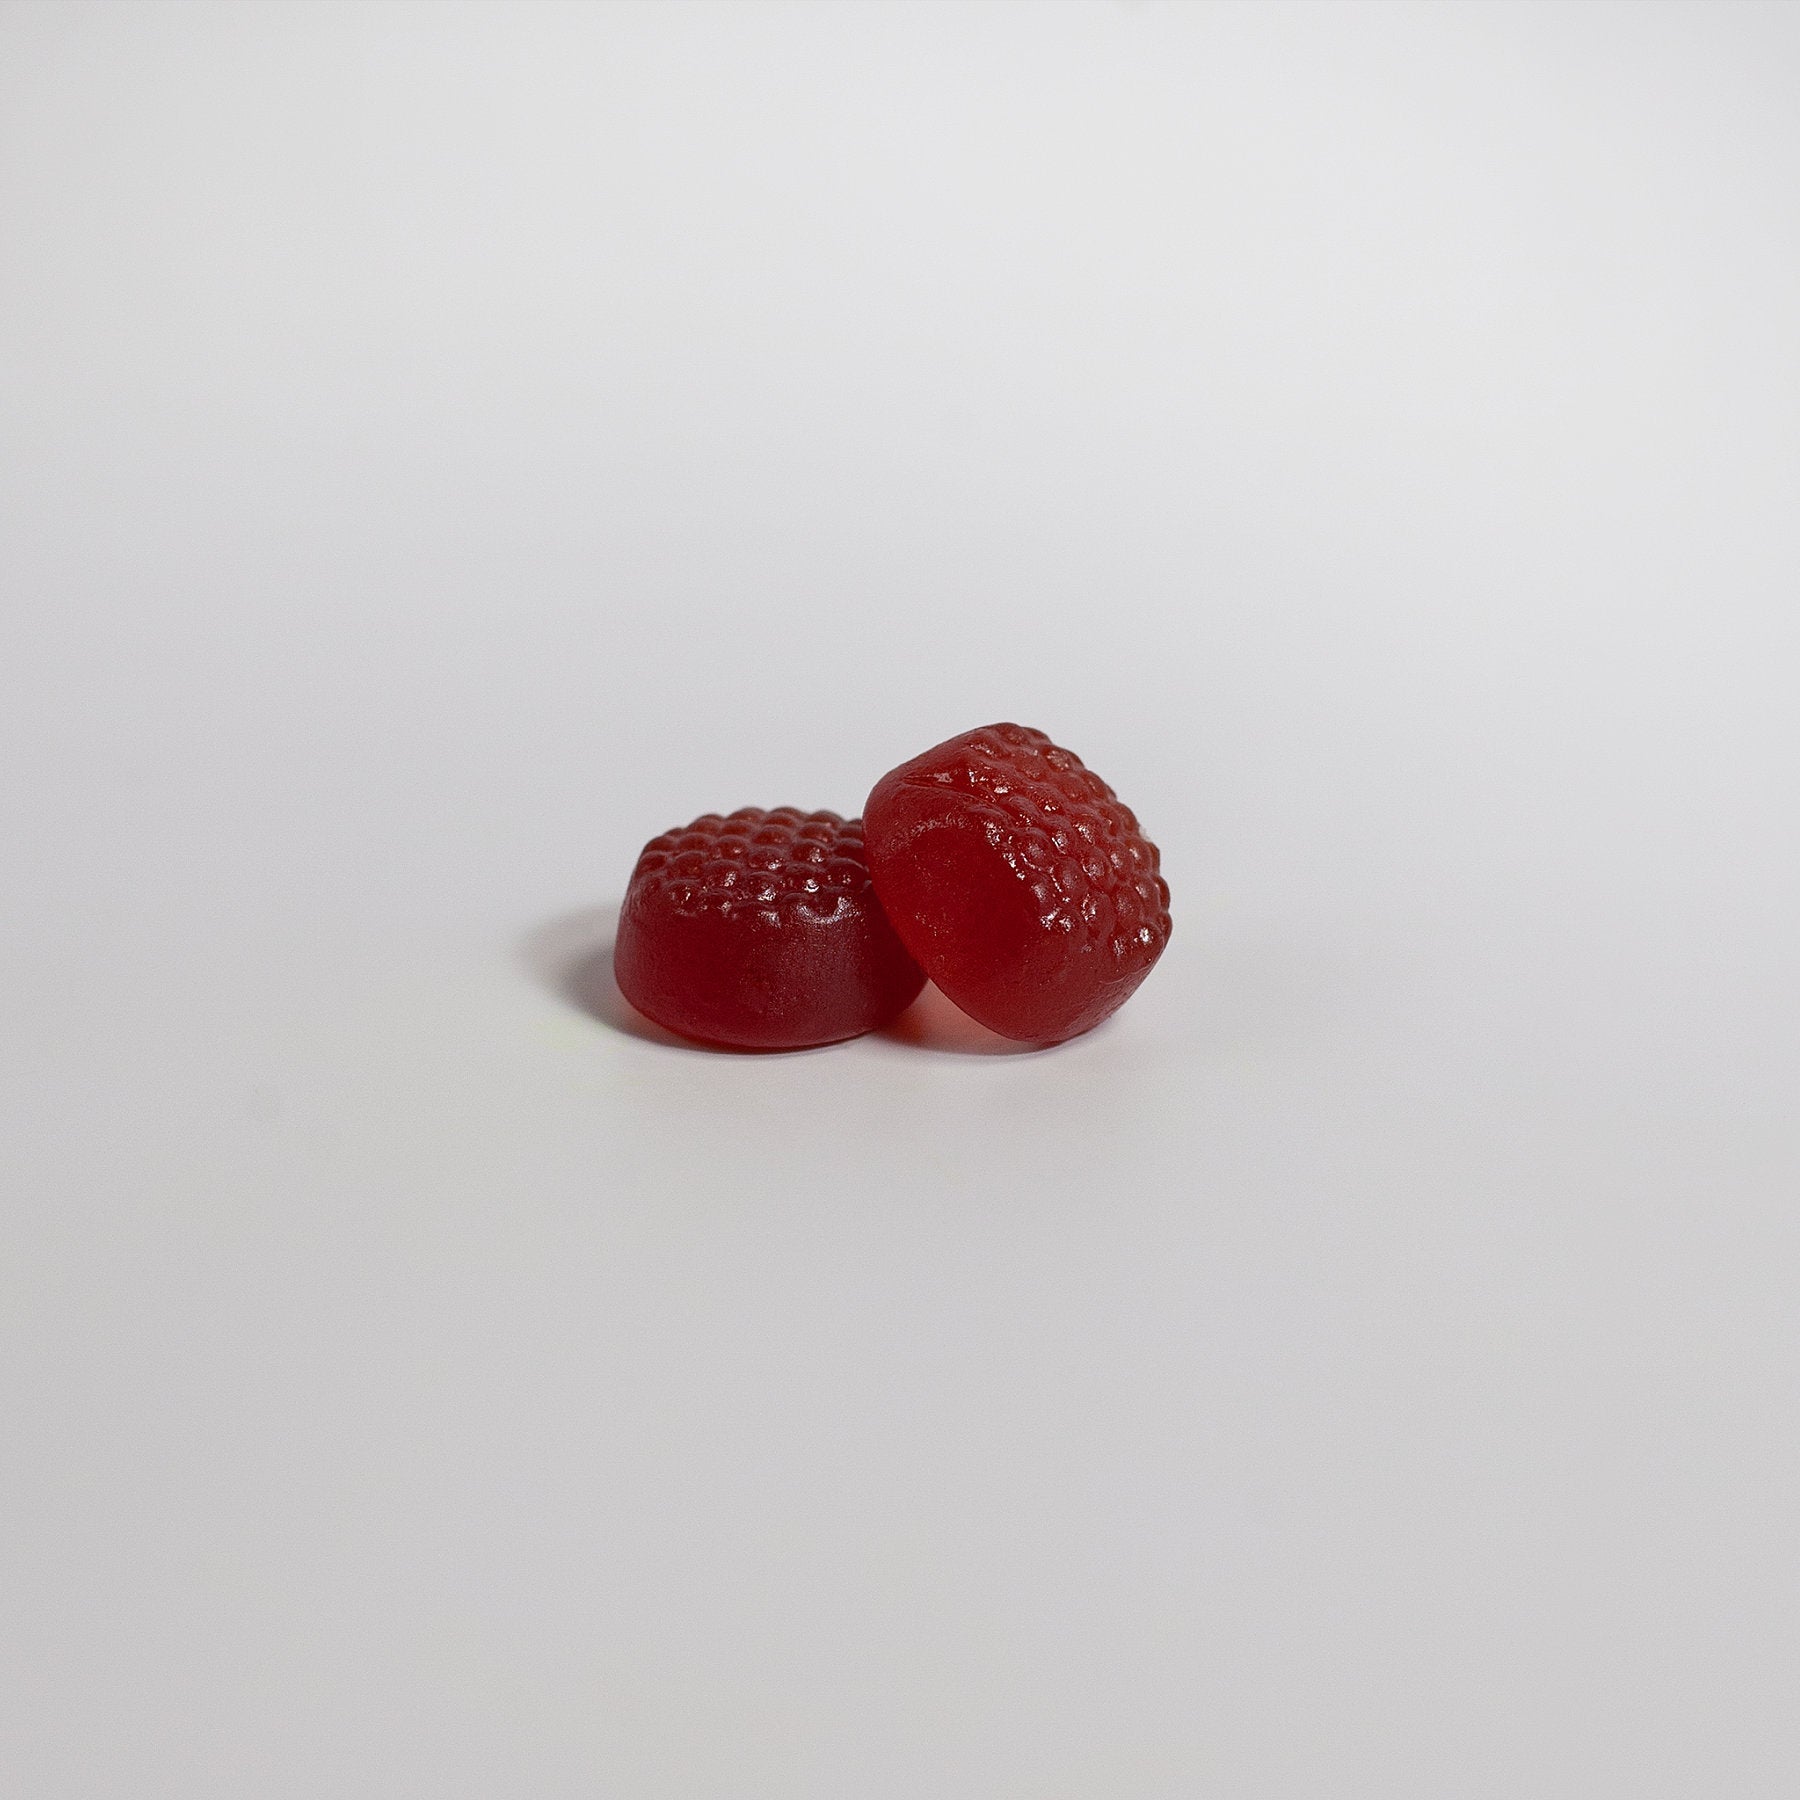 Elderberry & Vitamin C Gummies - Vitclear.